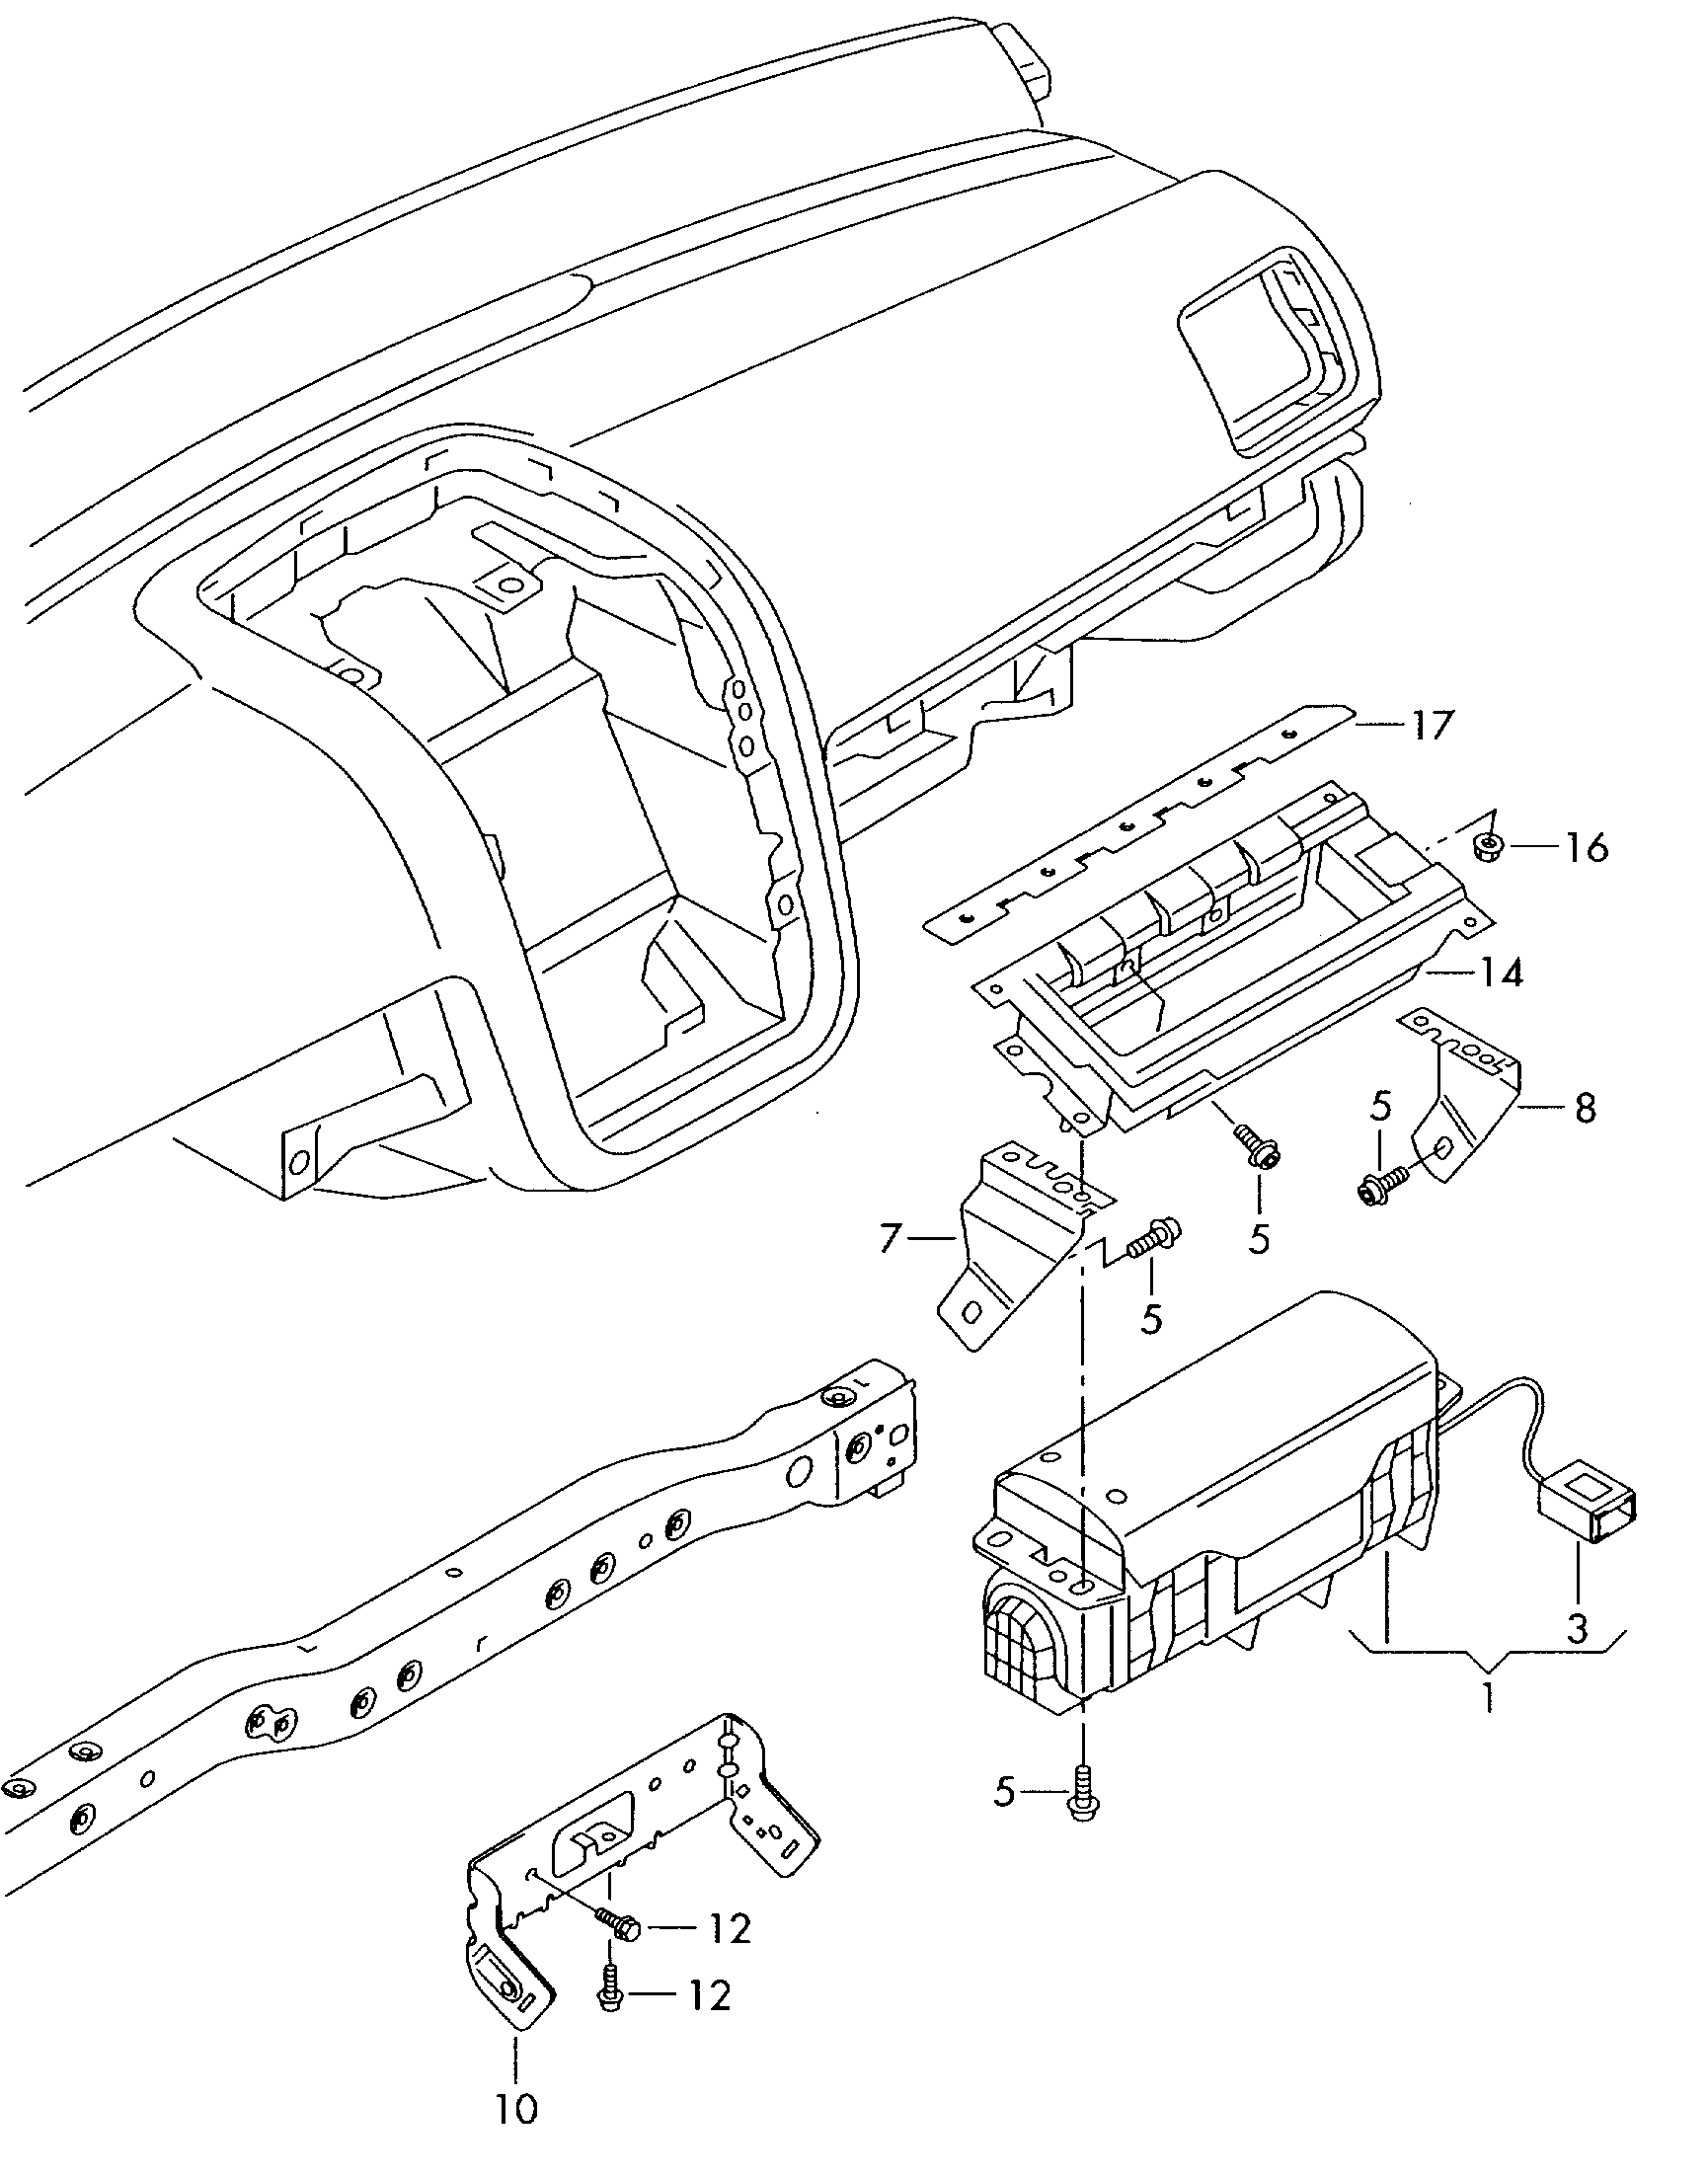 airbag unit; (passenger side) - Golf/Variant/4Motion(GOLF)  